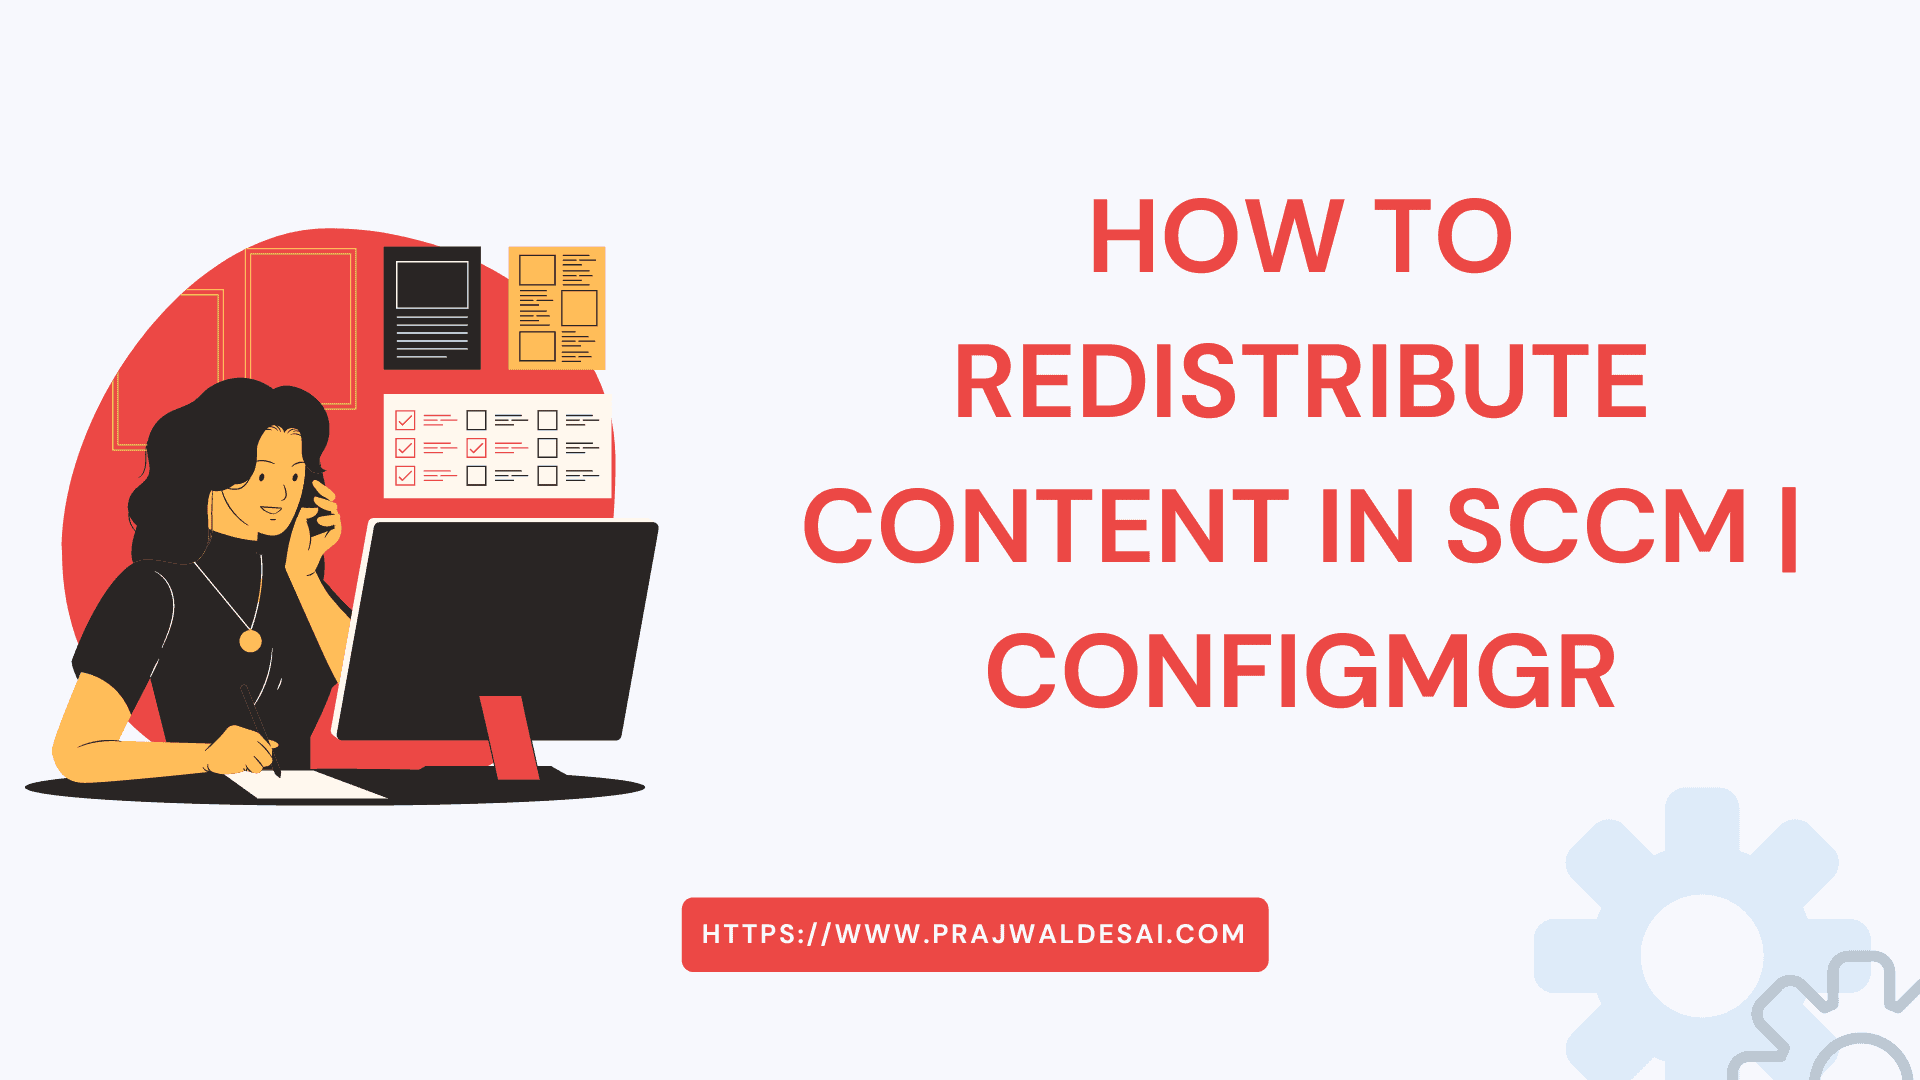 Redistribute Content in SCCM ConfigMgr